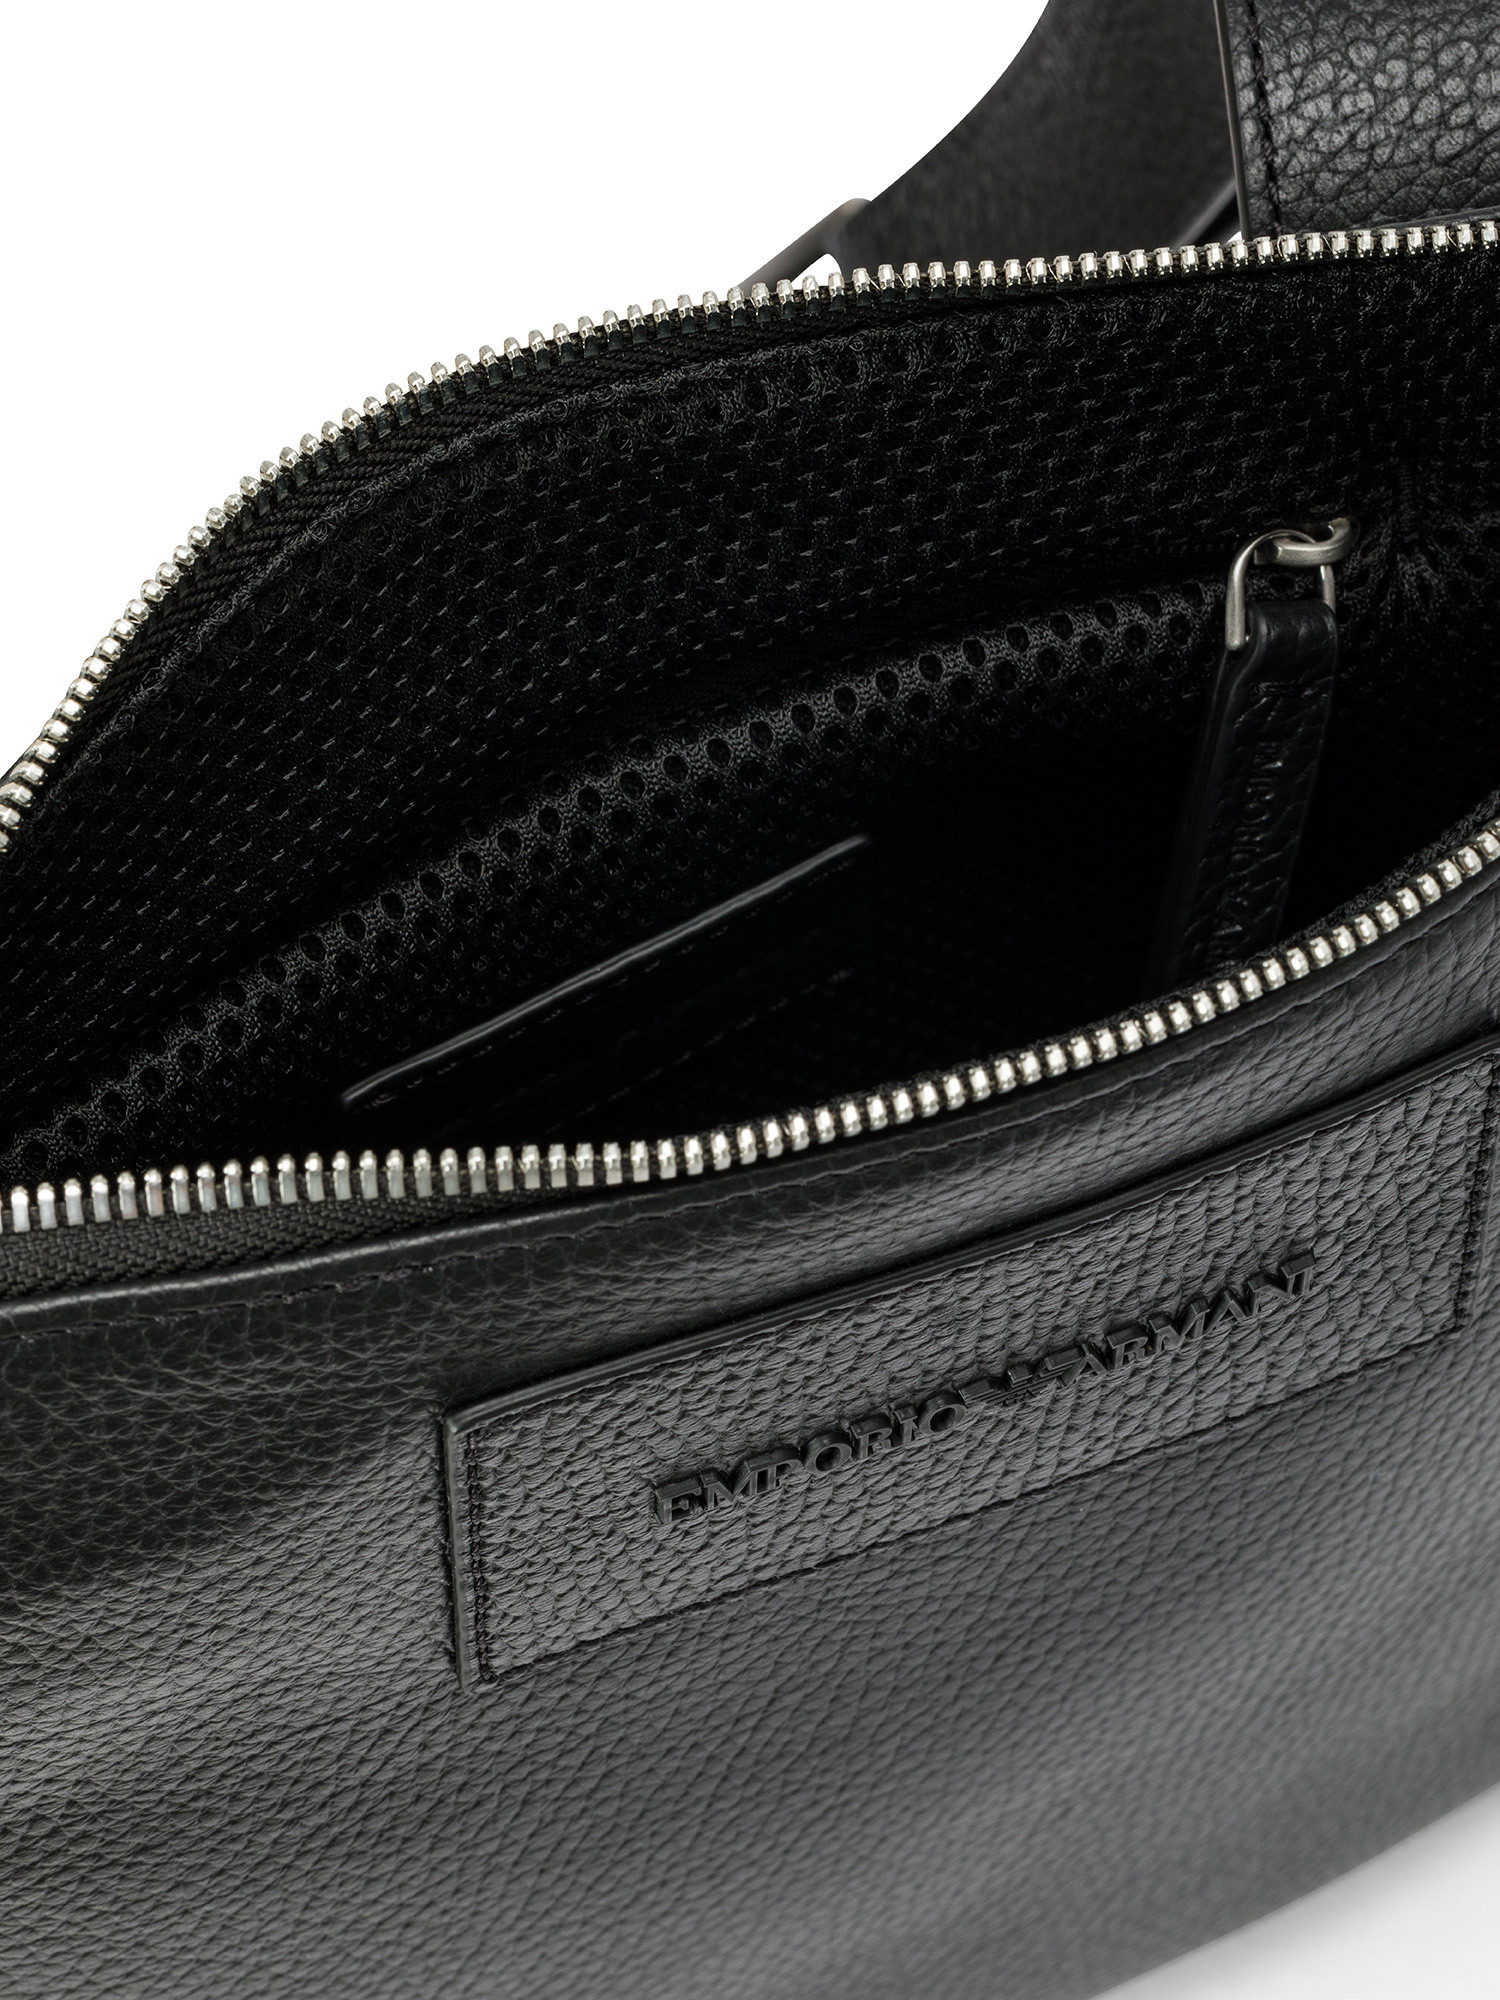 Emporio Armani - Shoulder bag in leather with logo, Black, large image number 2